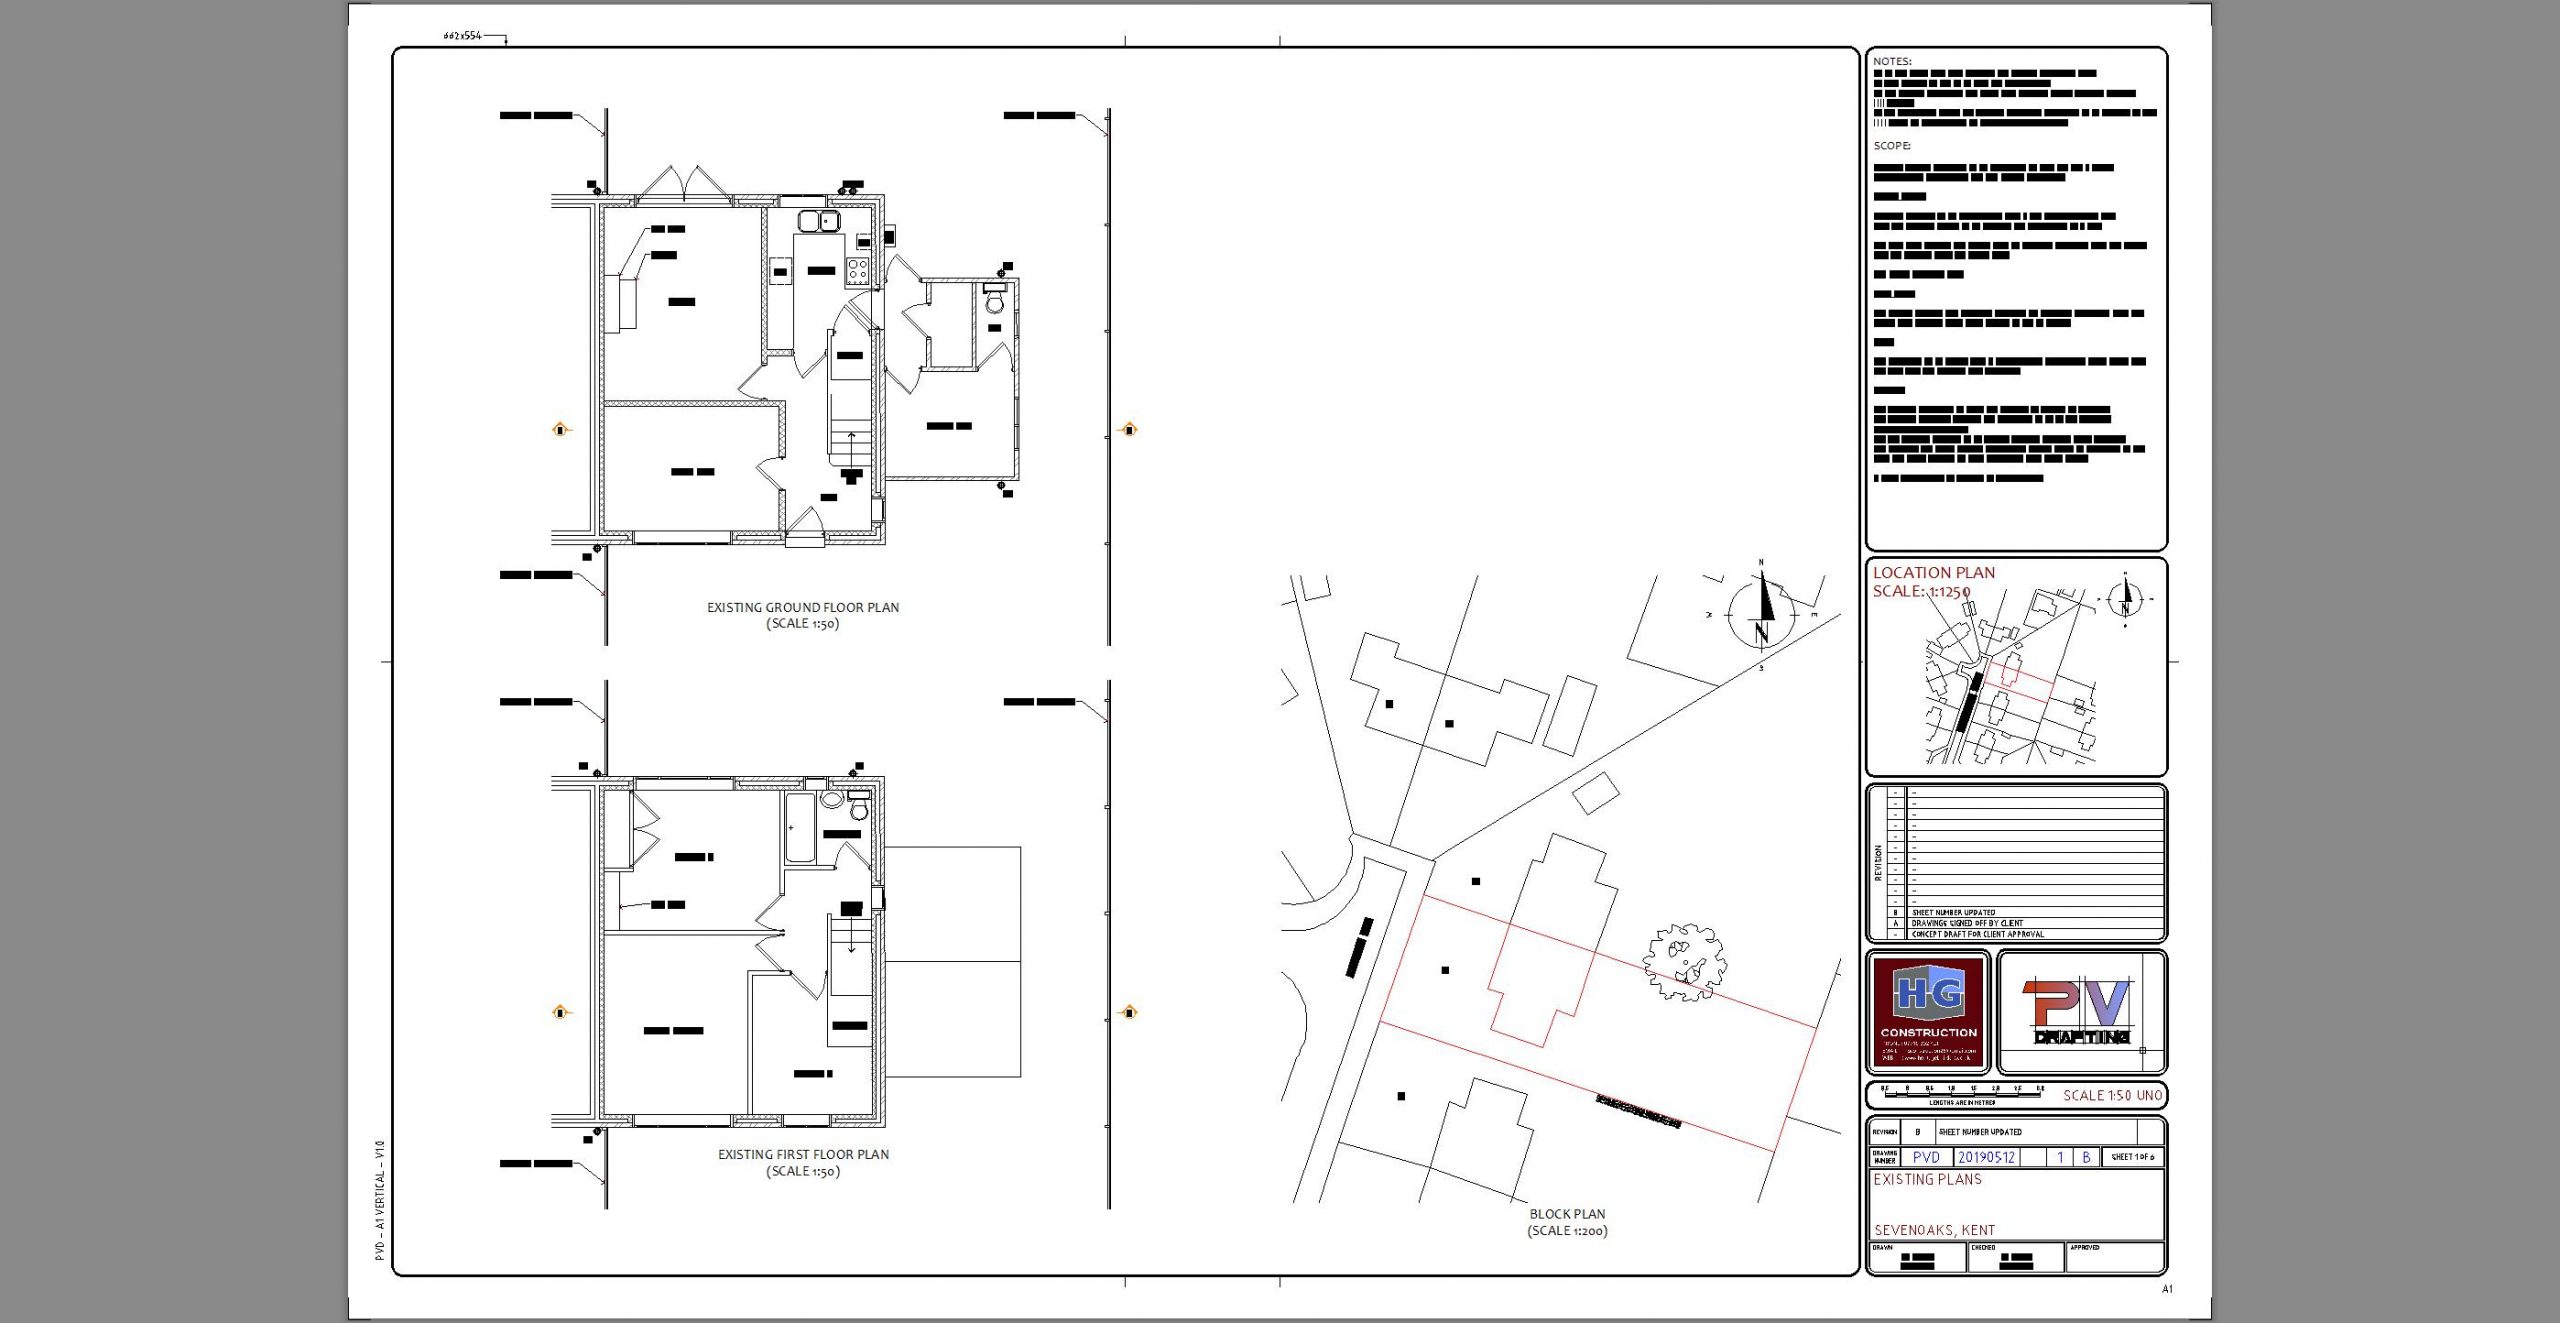 Building Regulations Drawing - Sevenoaks Kent - Existing Plans